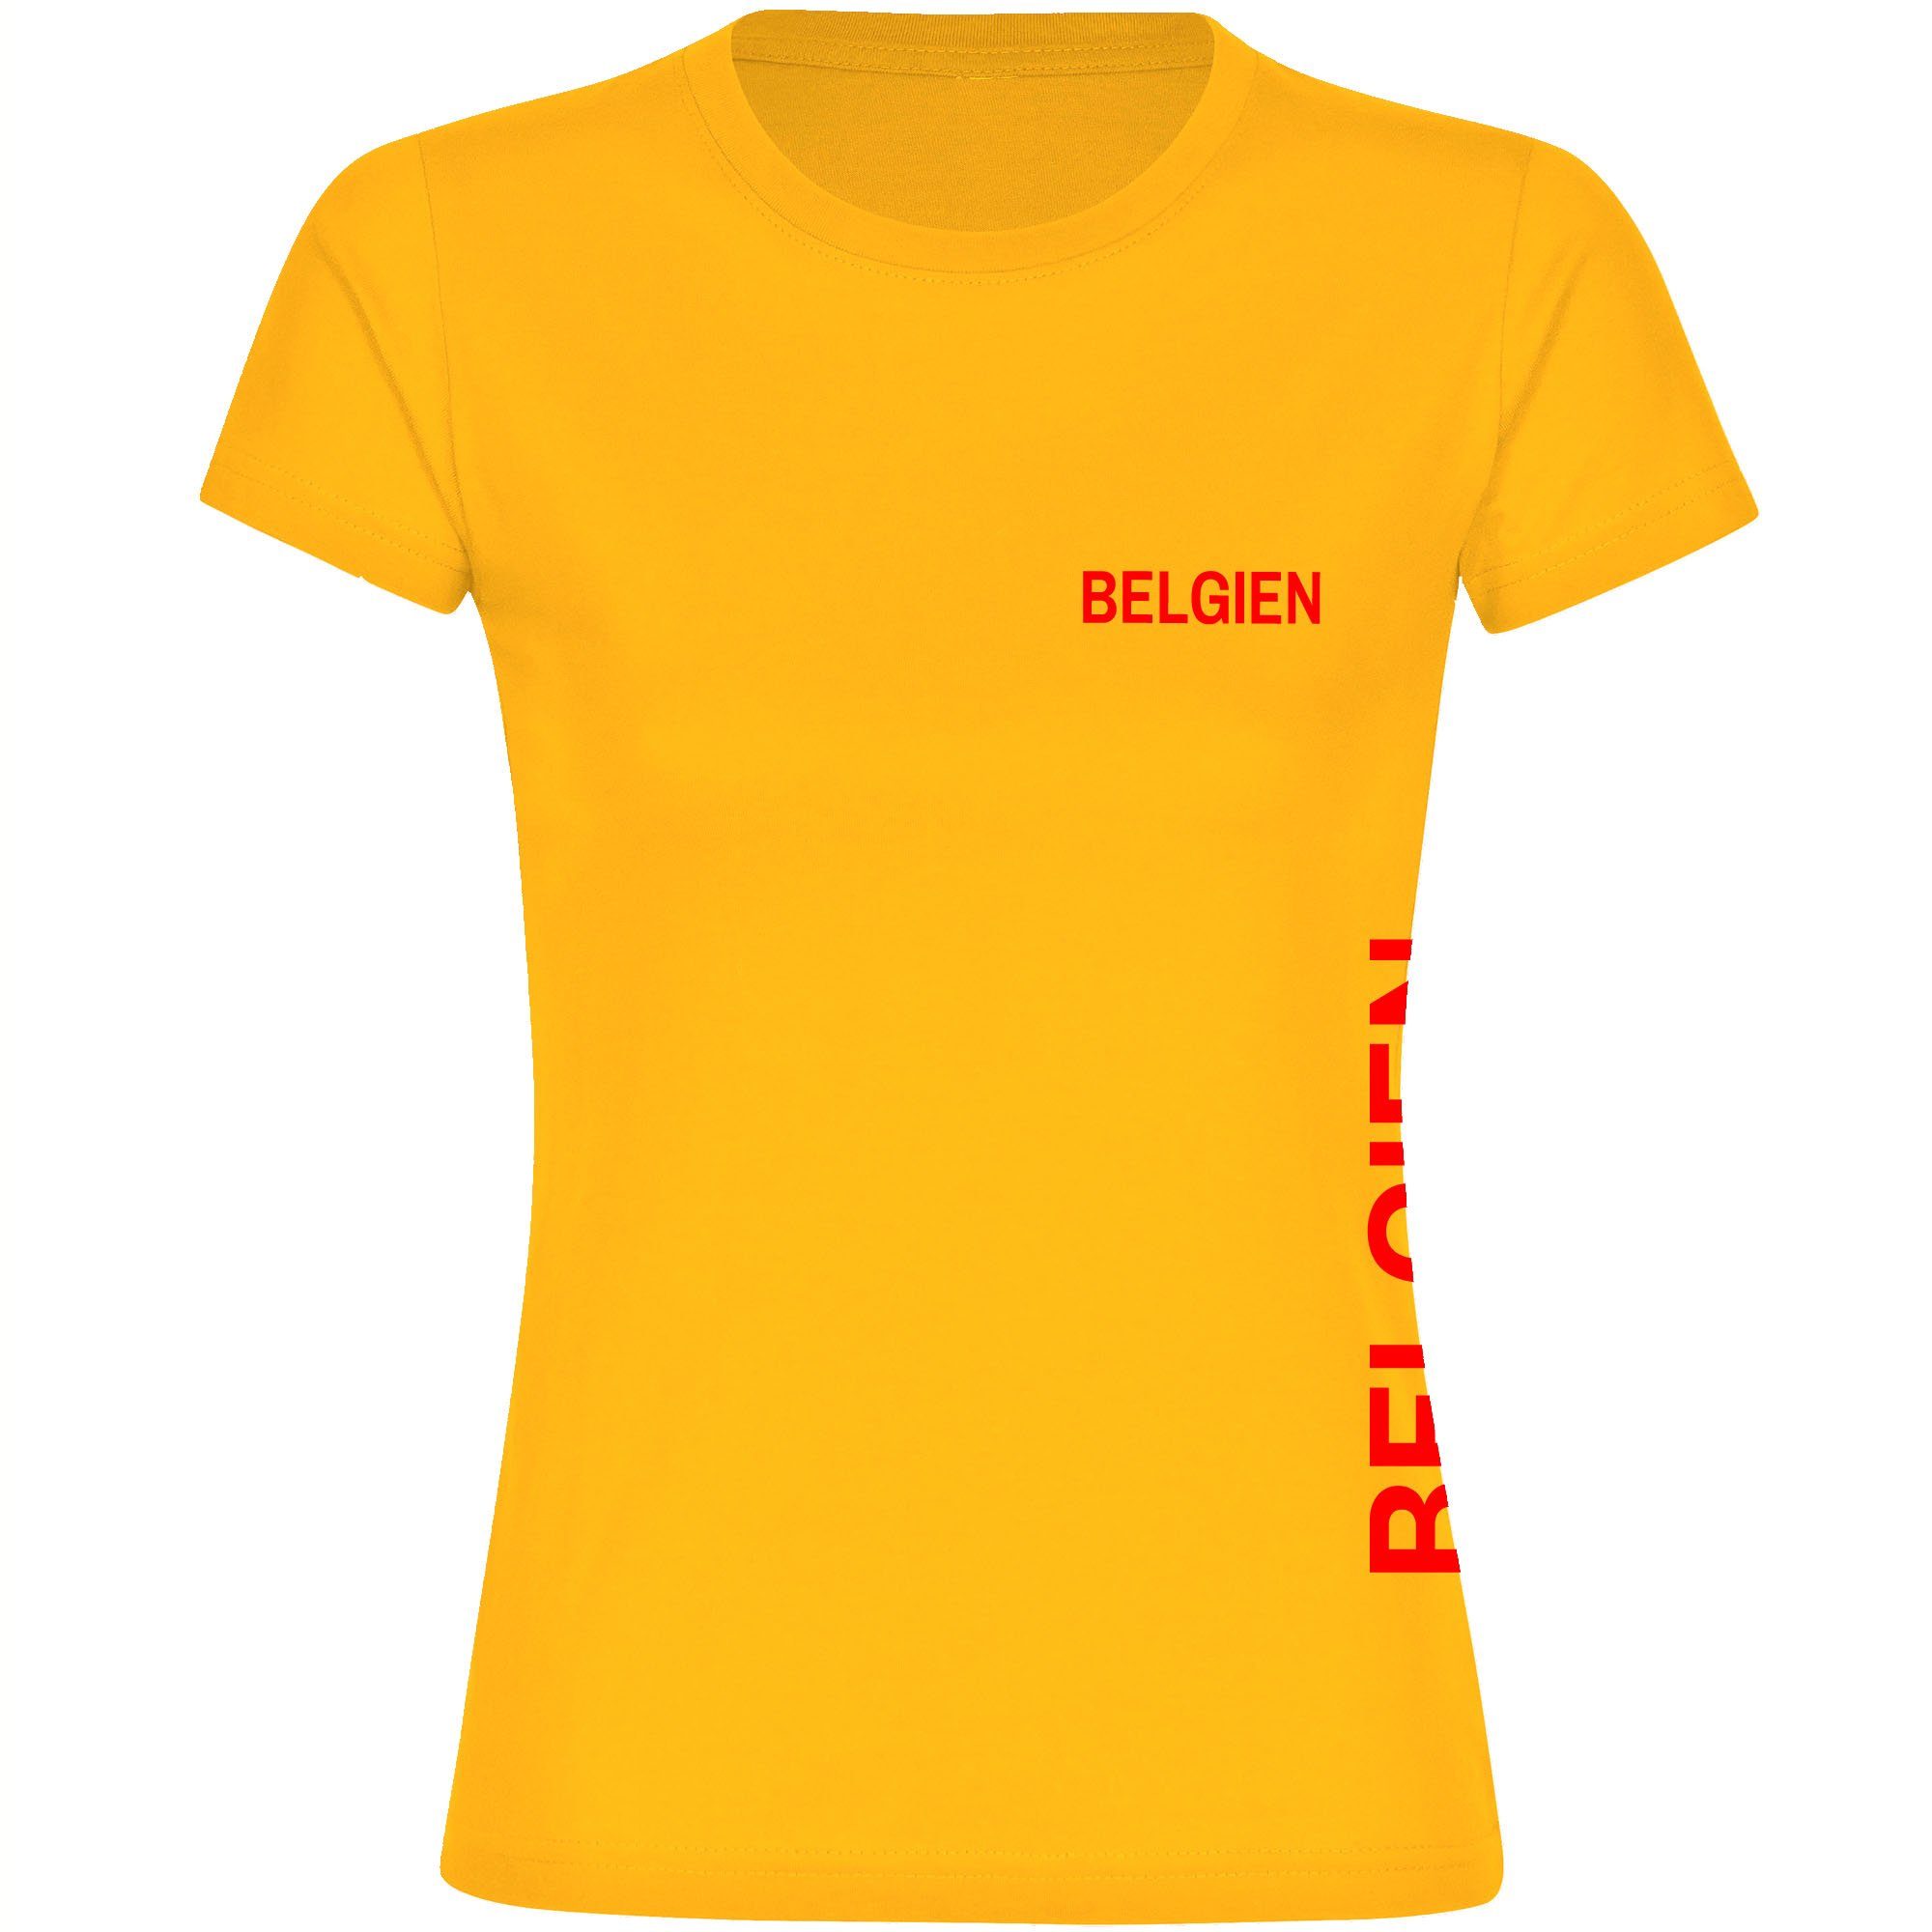 multifanshop T-Shirt Damen Belgien - Brust & Seite - Frauen